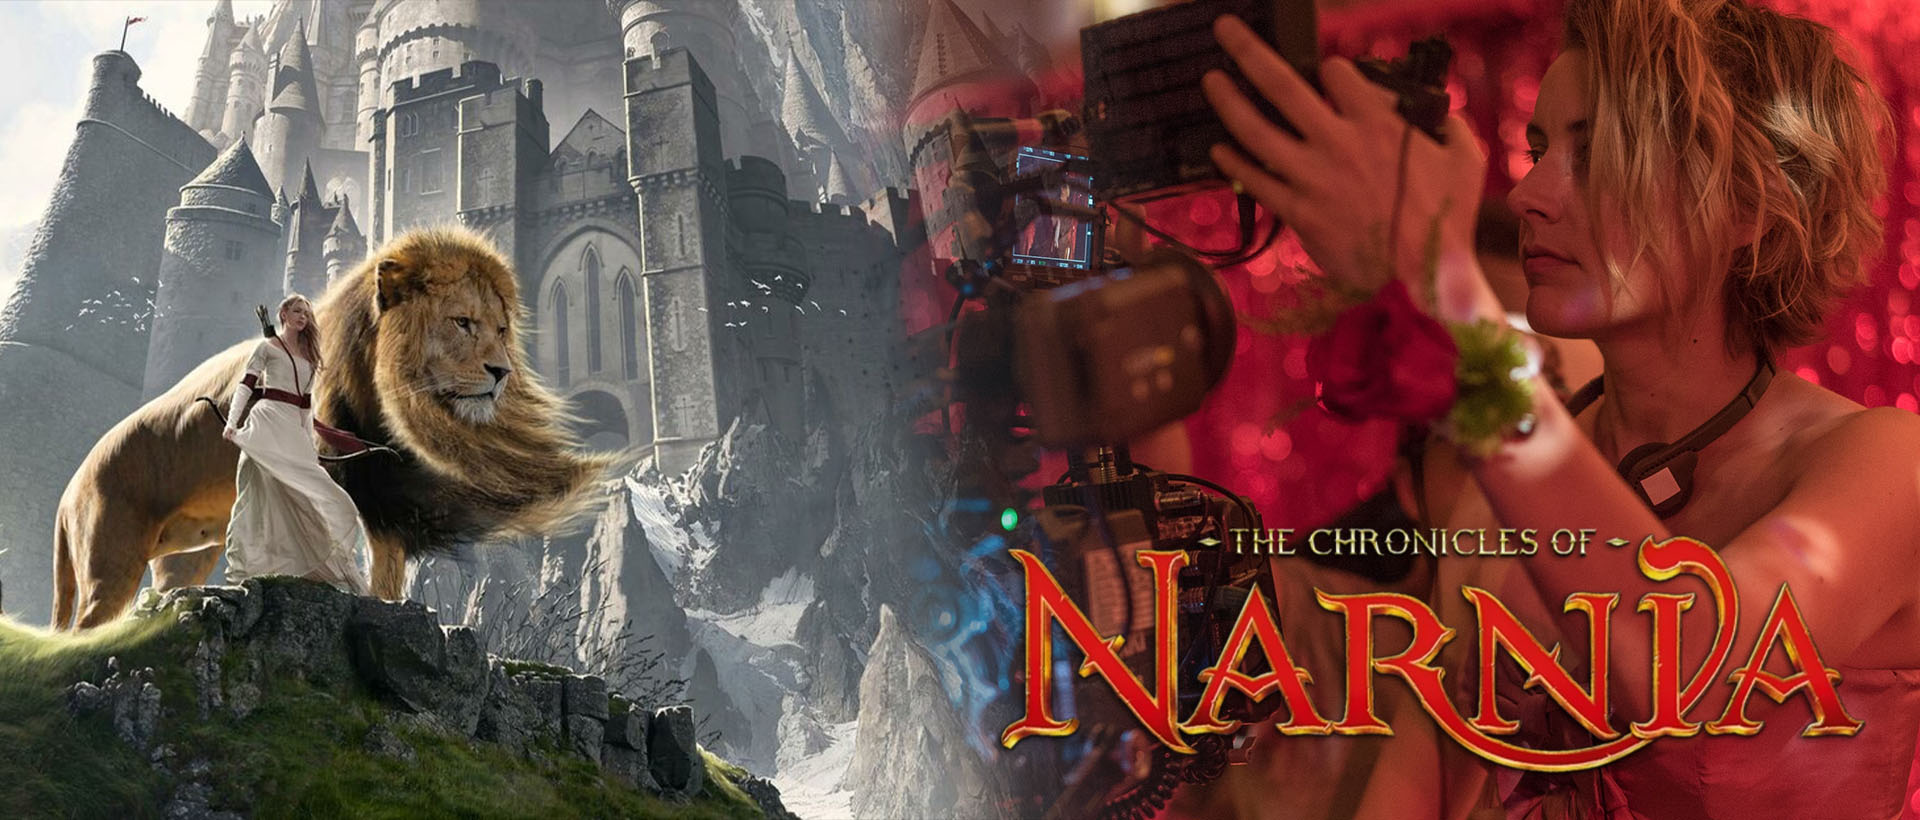 Aslan  Chronicles of narnia, Narnia, Aslan narnia